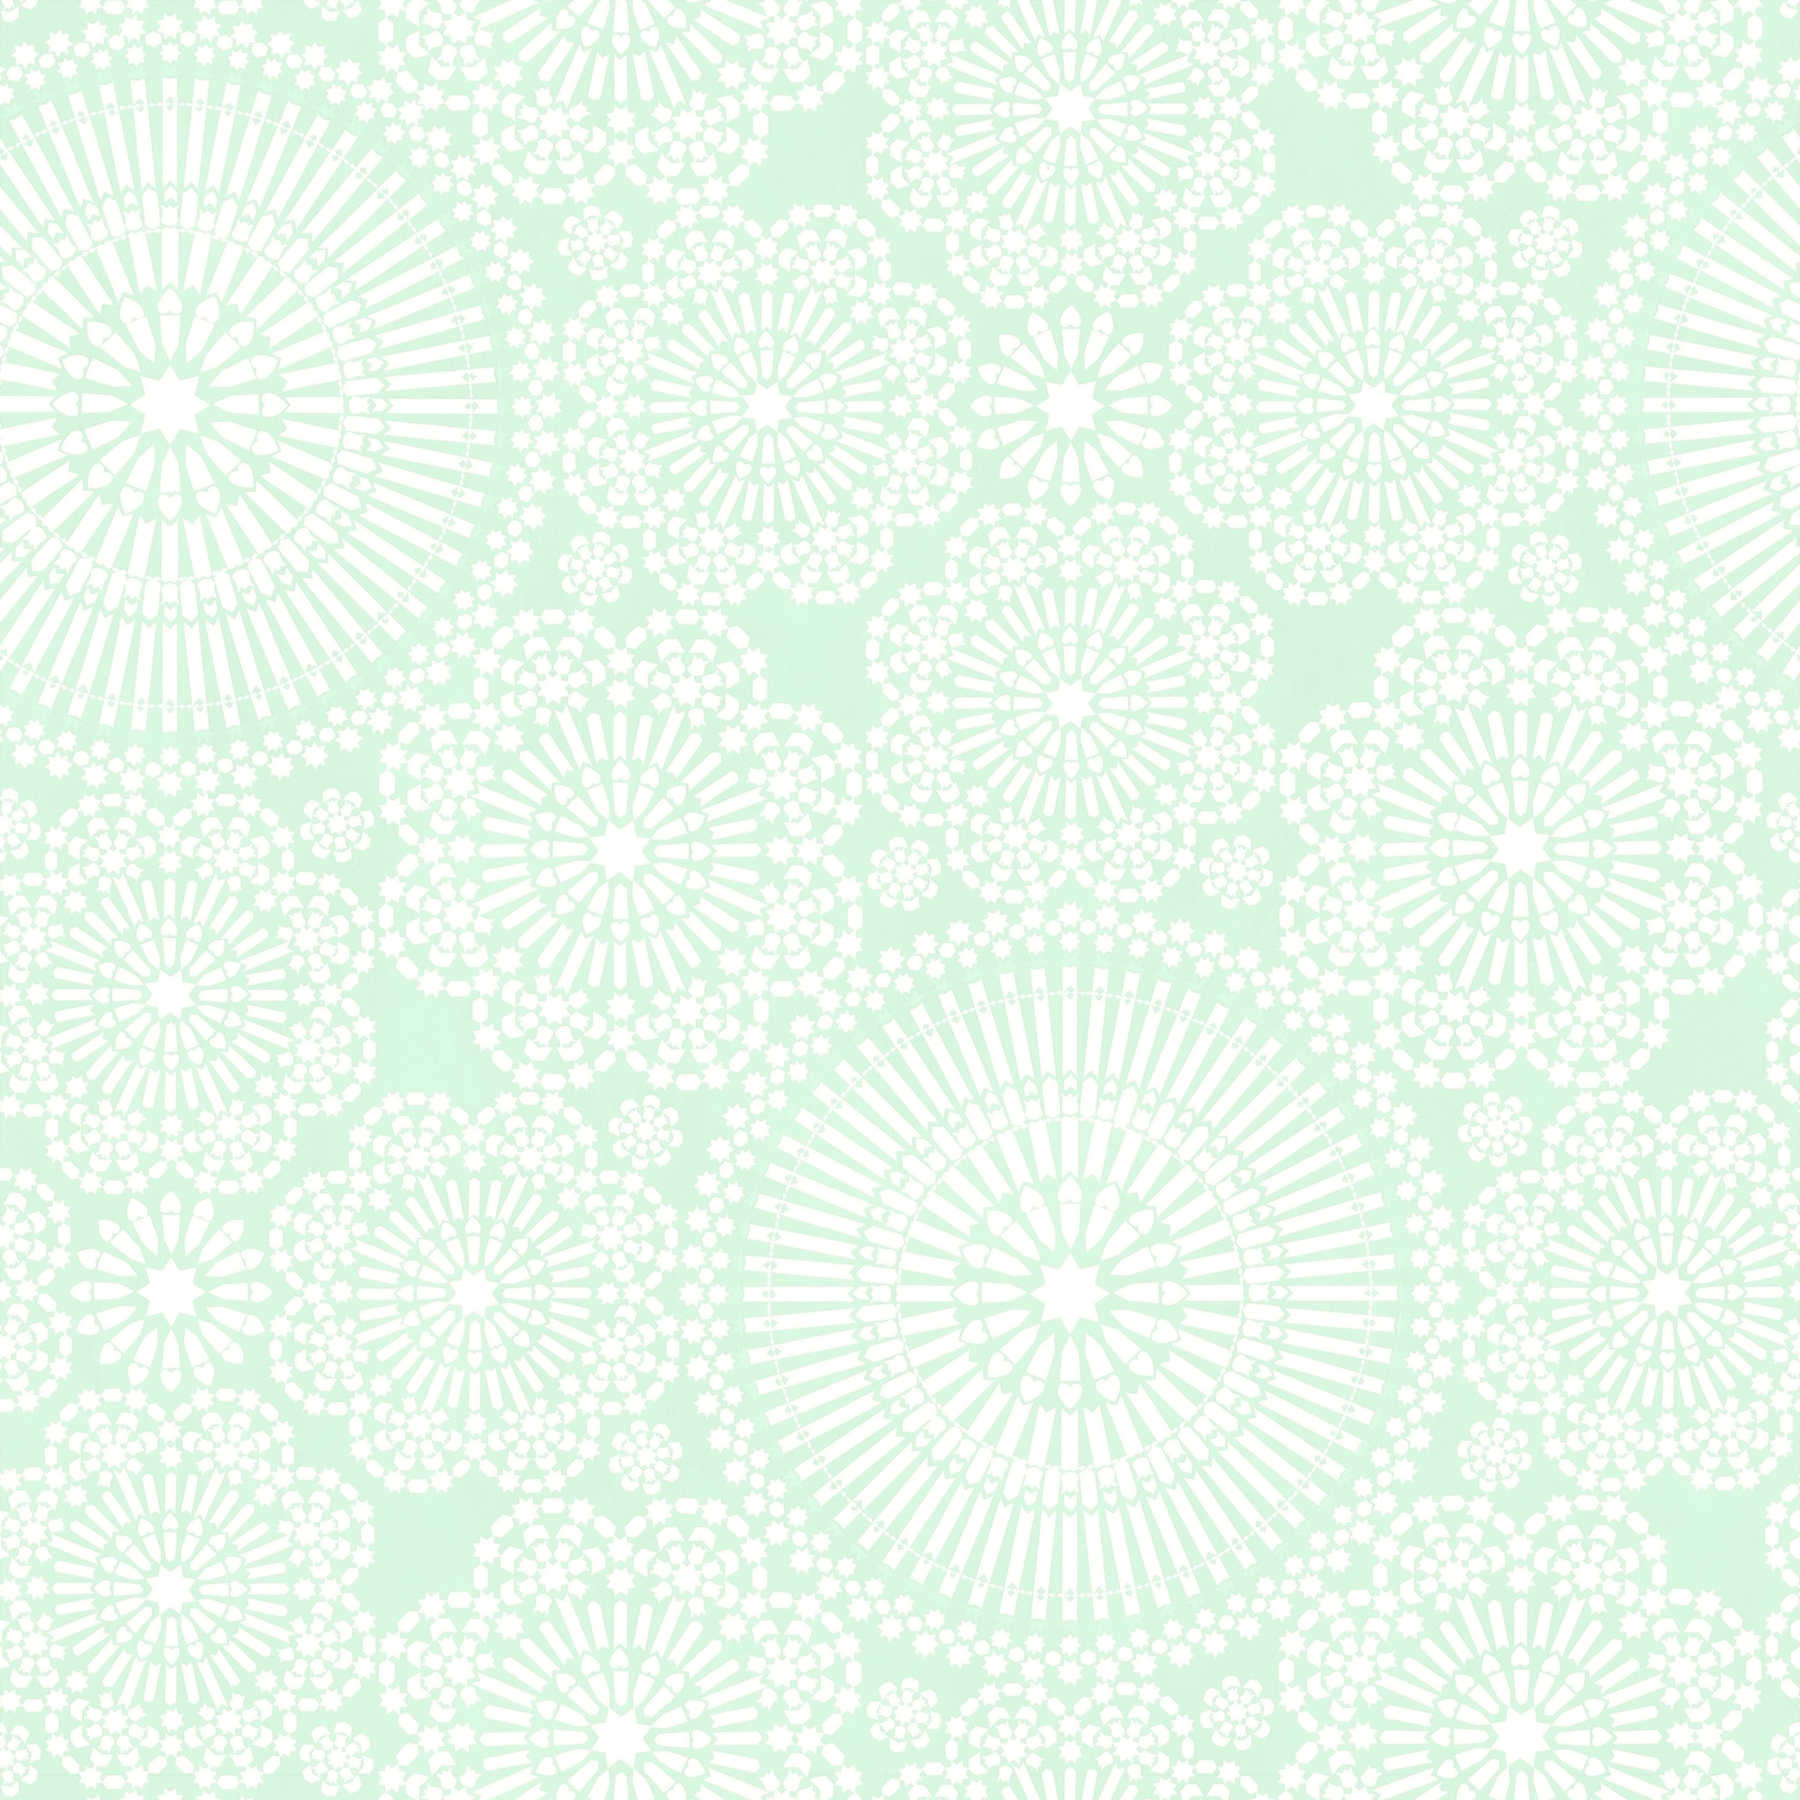 Papier peint Mandala avec design floral - bleu, vert, blanc
